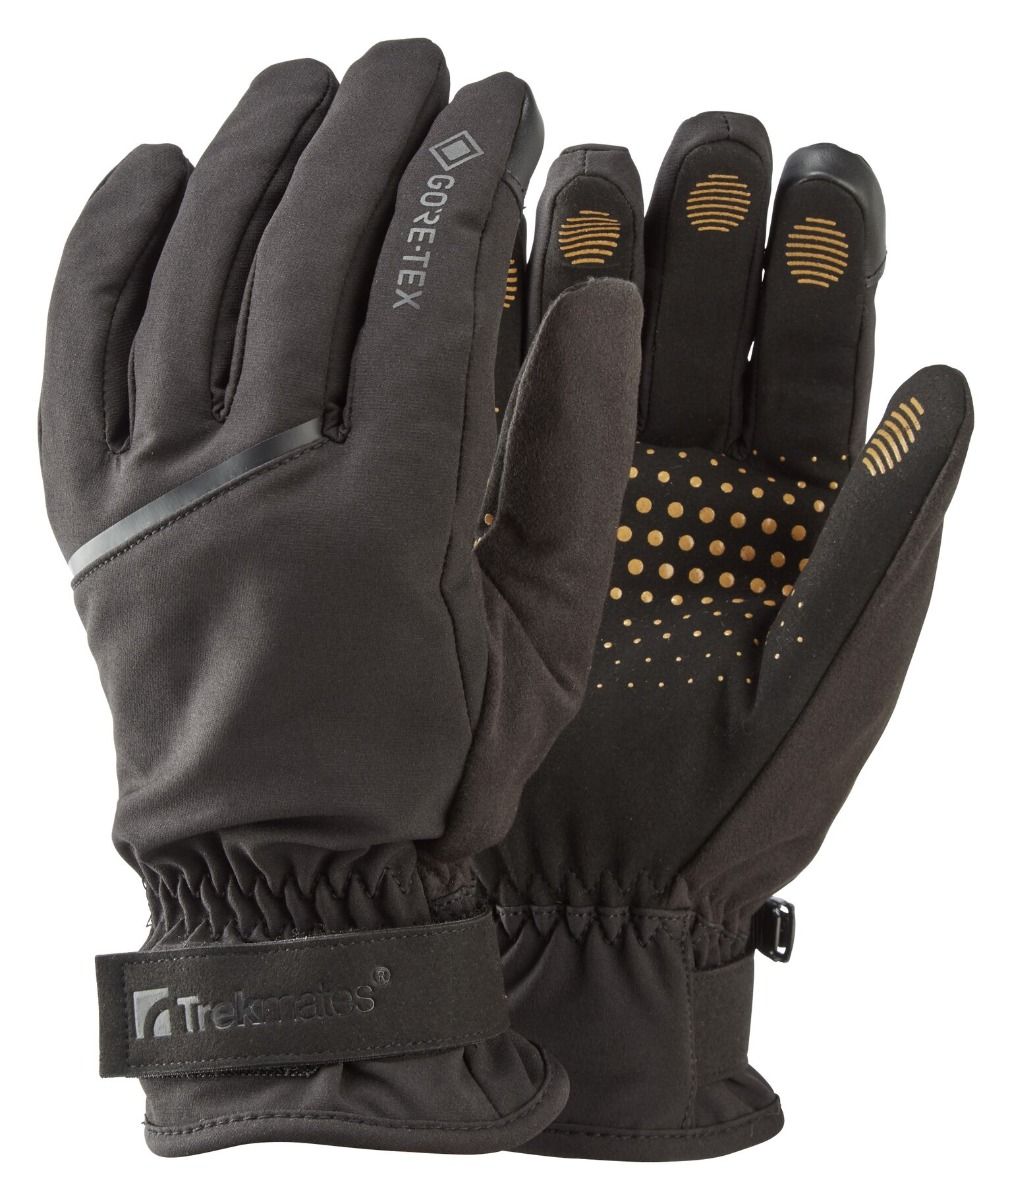 Перчатки Trekmates Friktion Gore Tex Grip Glove TM 004543 Black, размер S, черные фото 